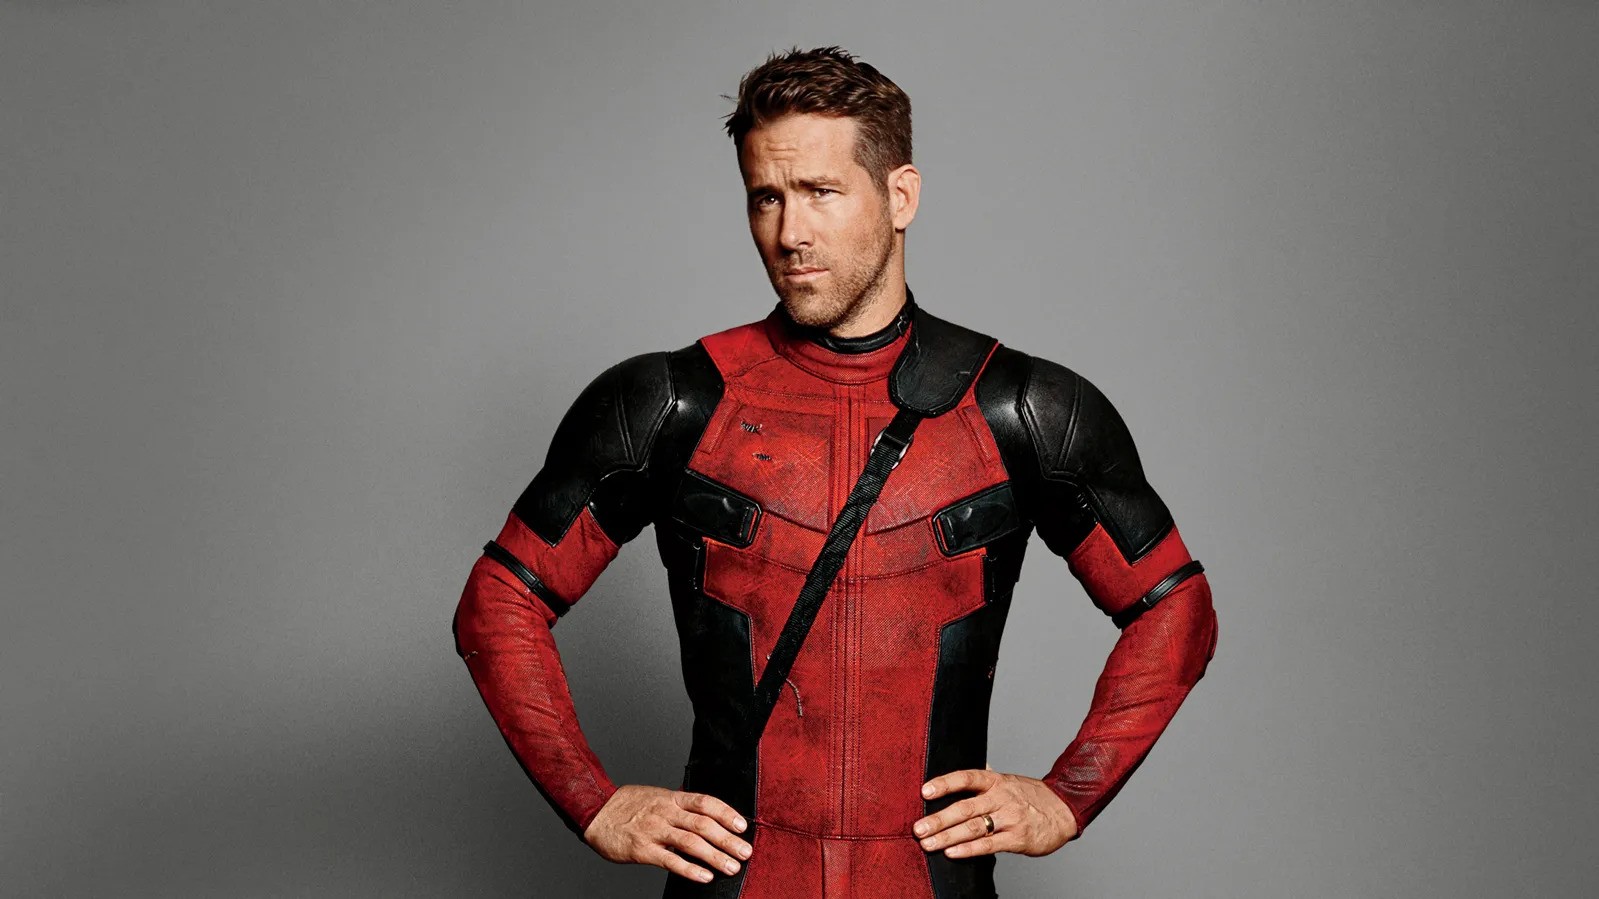 Ryan Reynolds in Deadpool suit